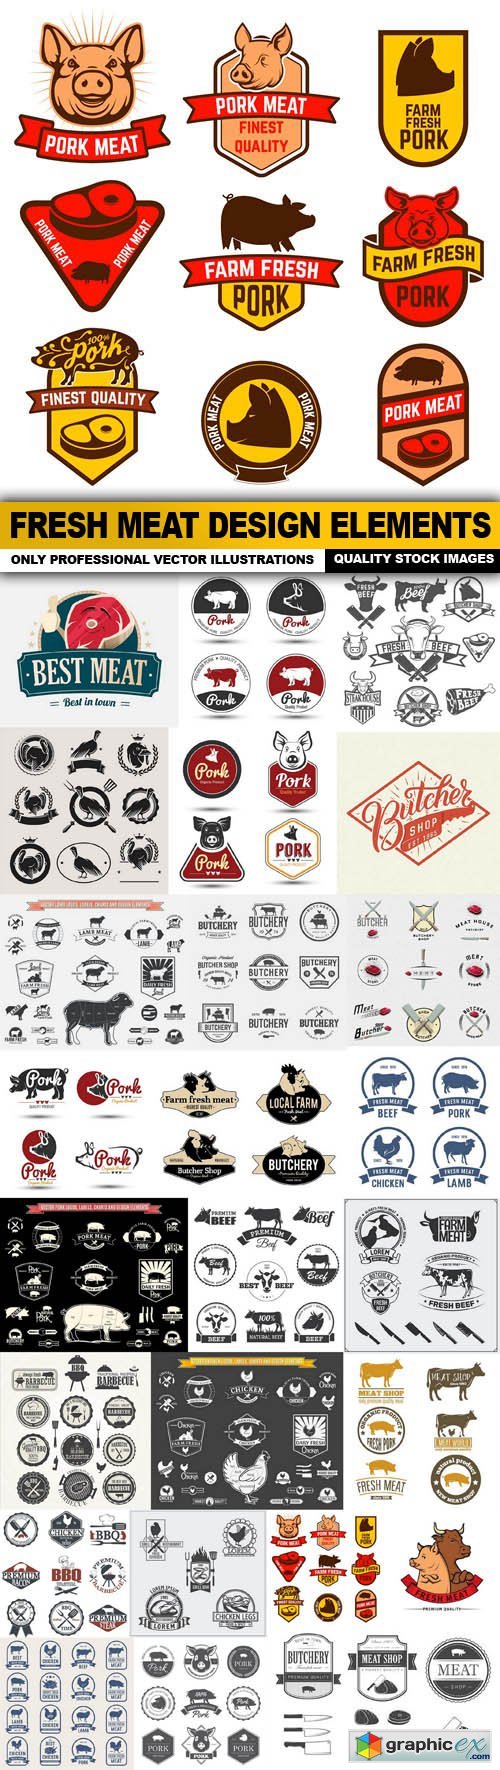 Fresh Meat Design Elements - 25 Vector